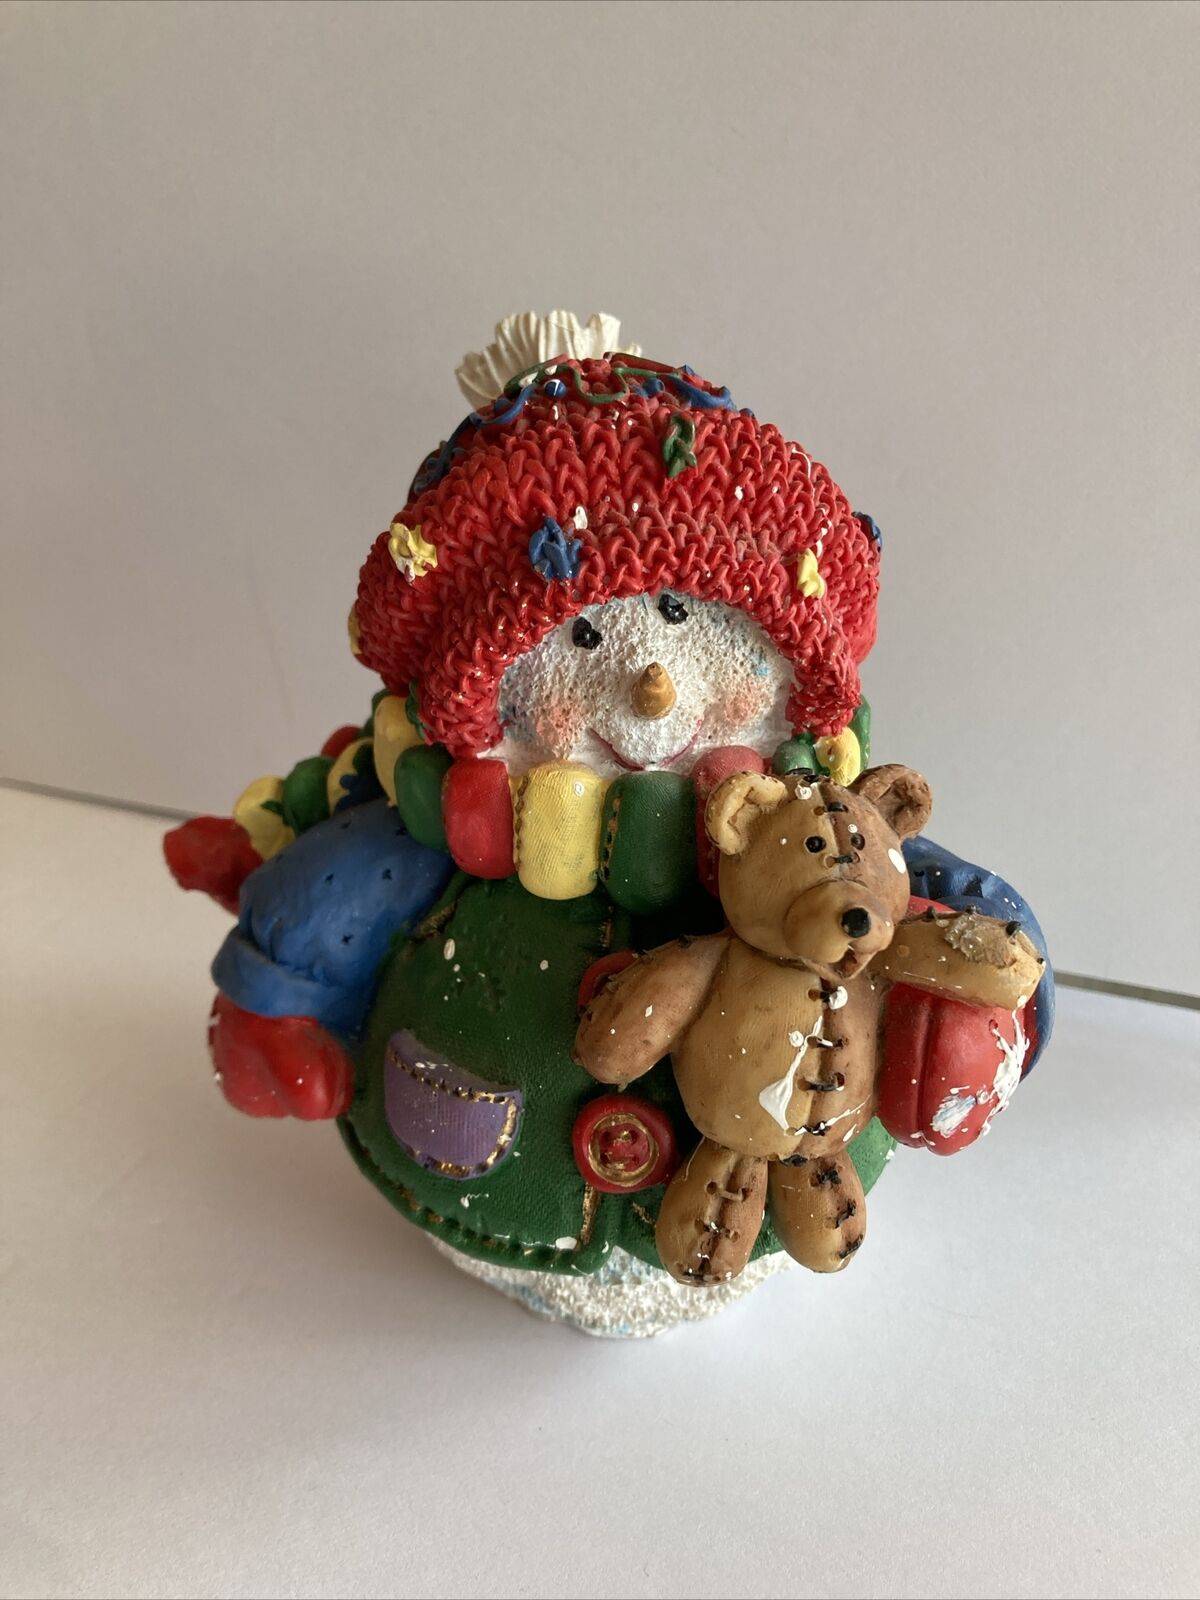 Vintage Ceramic Snowman Holding A Teddy Bear From Meijer - Christmas Figurine